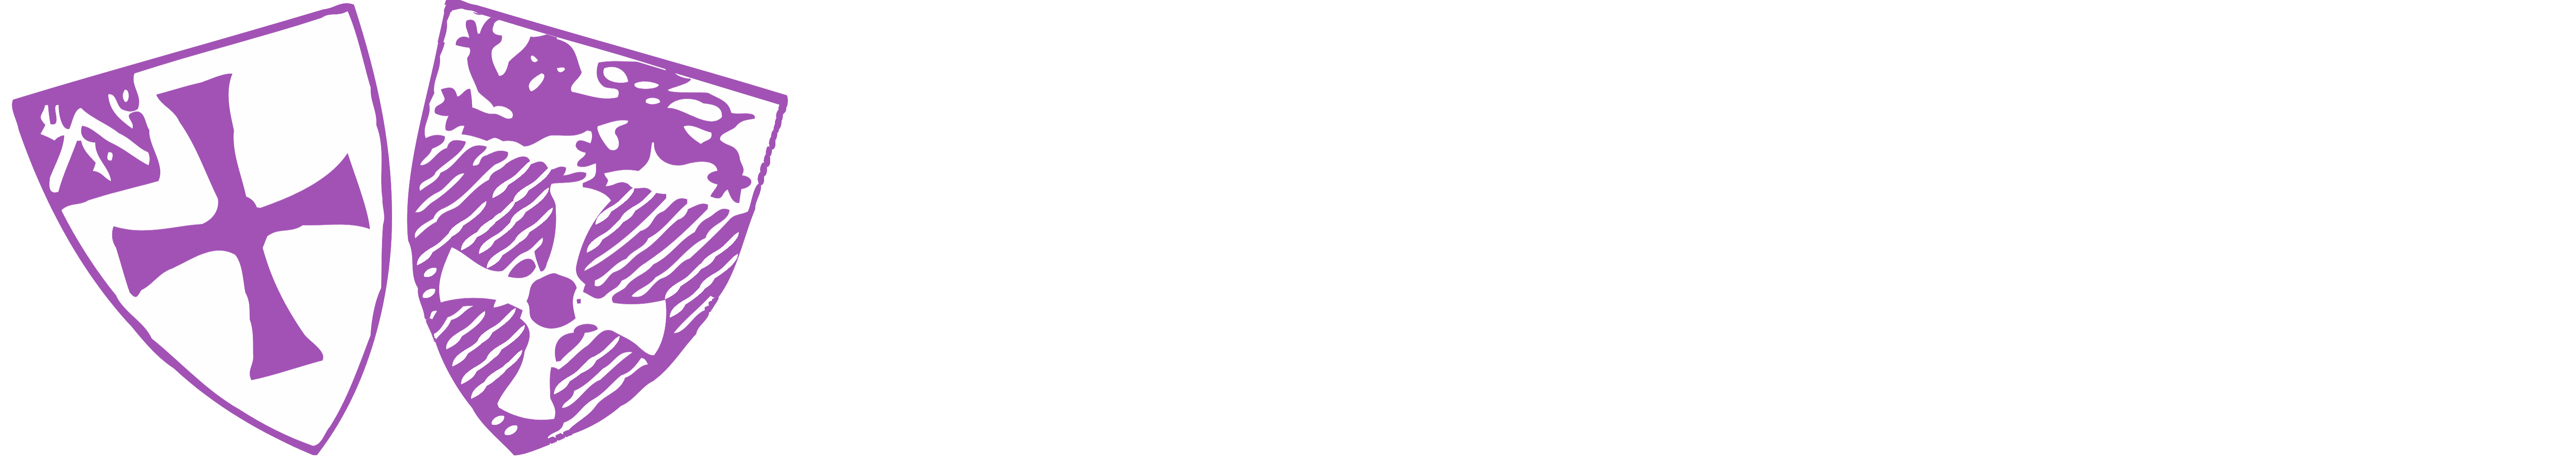 Grays of Durham Logo